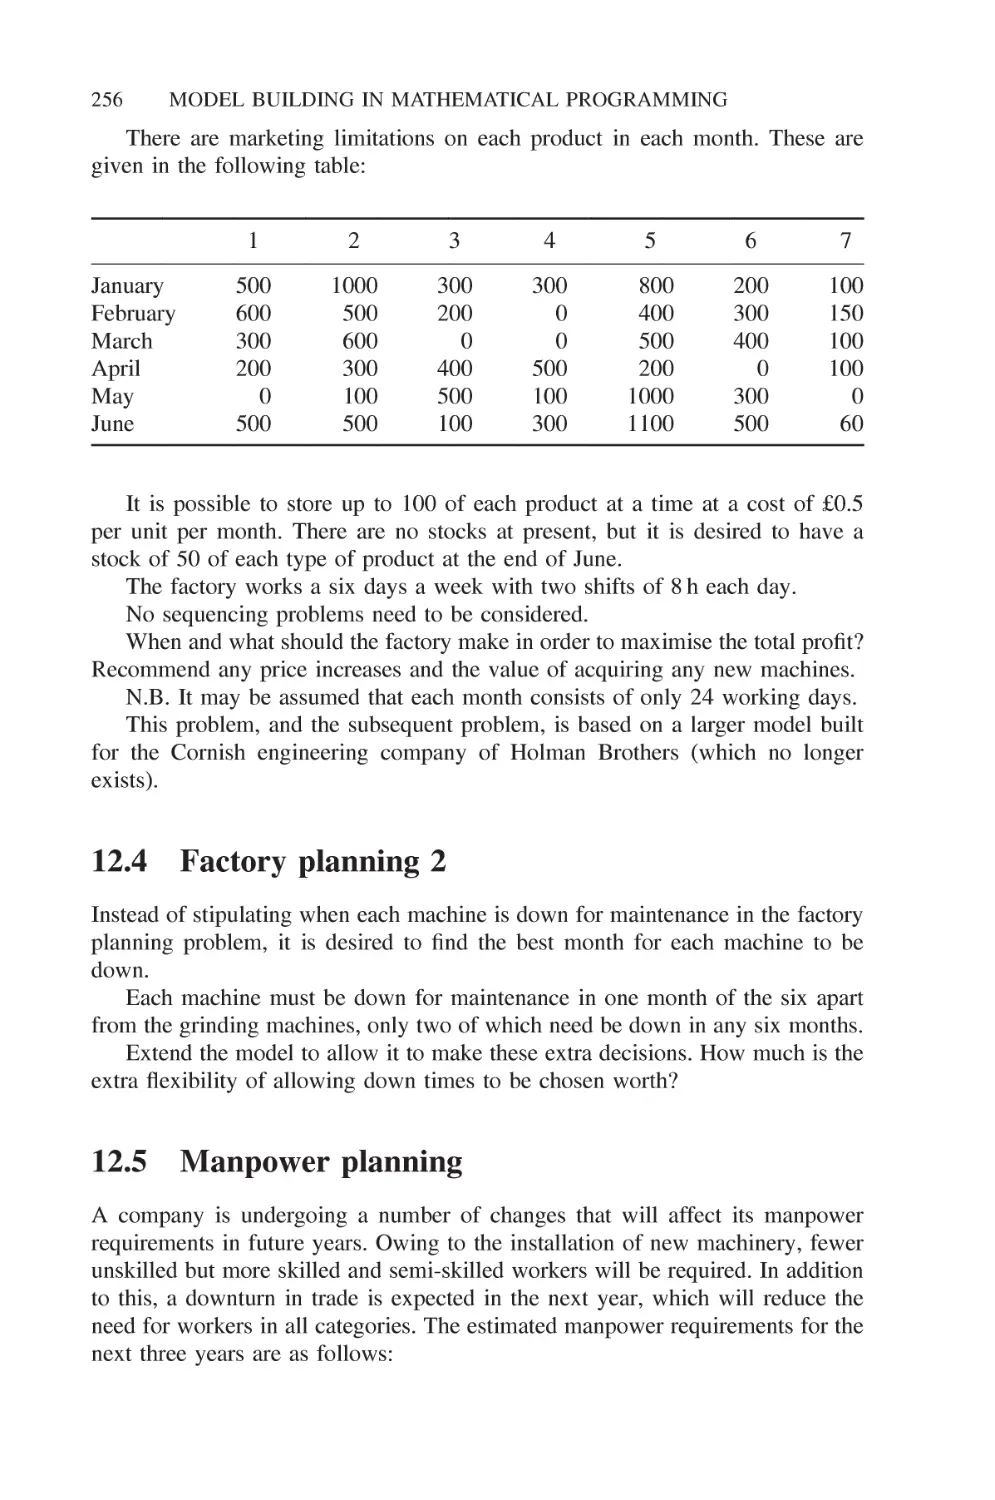 12.4 Factory planning 2
12.5 Manpower planning